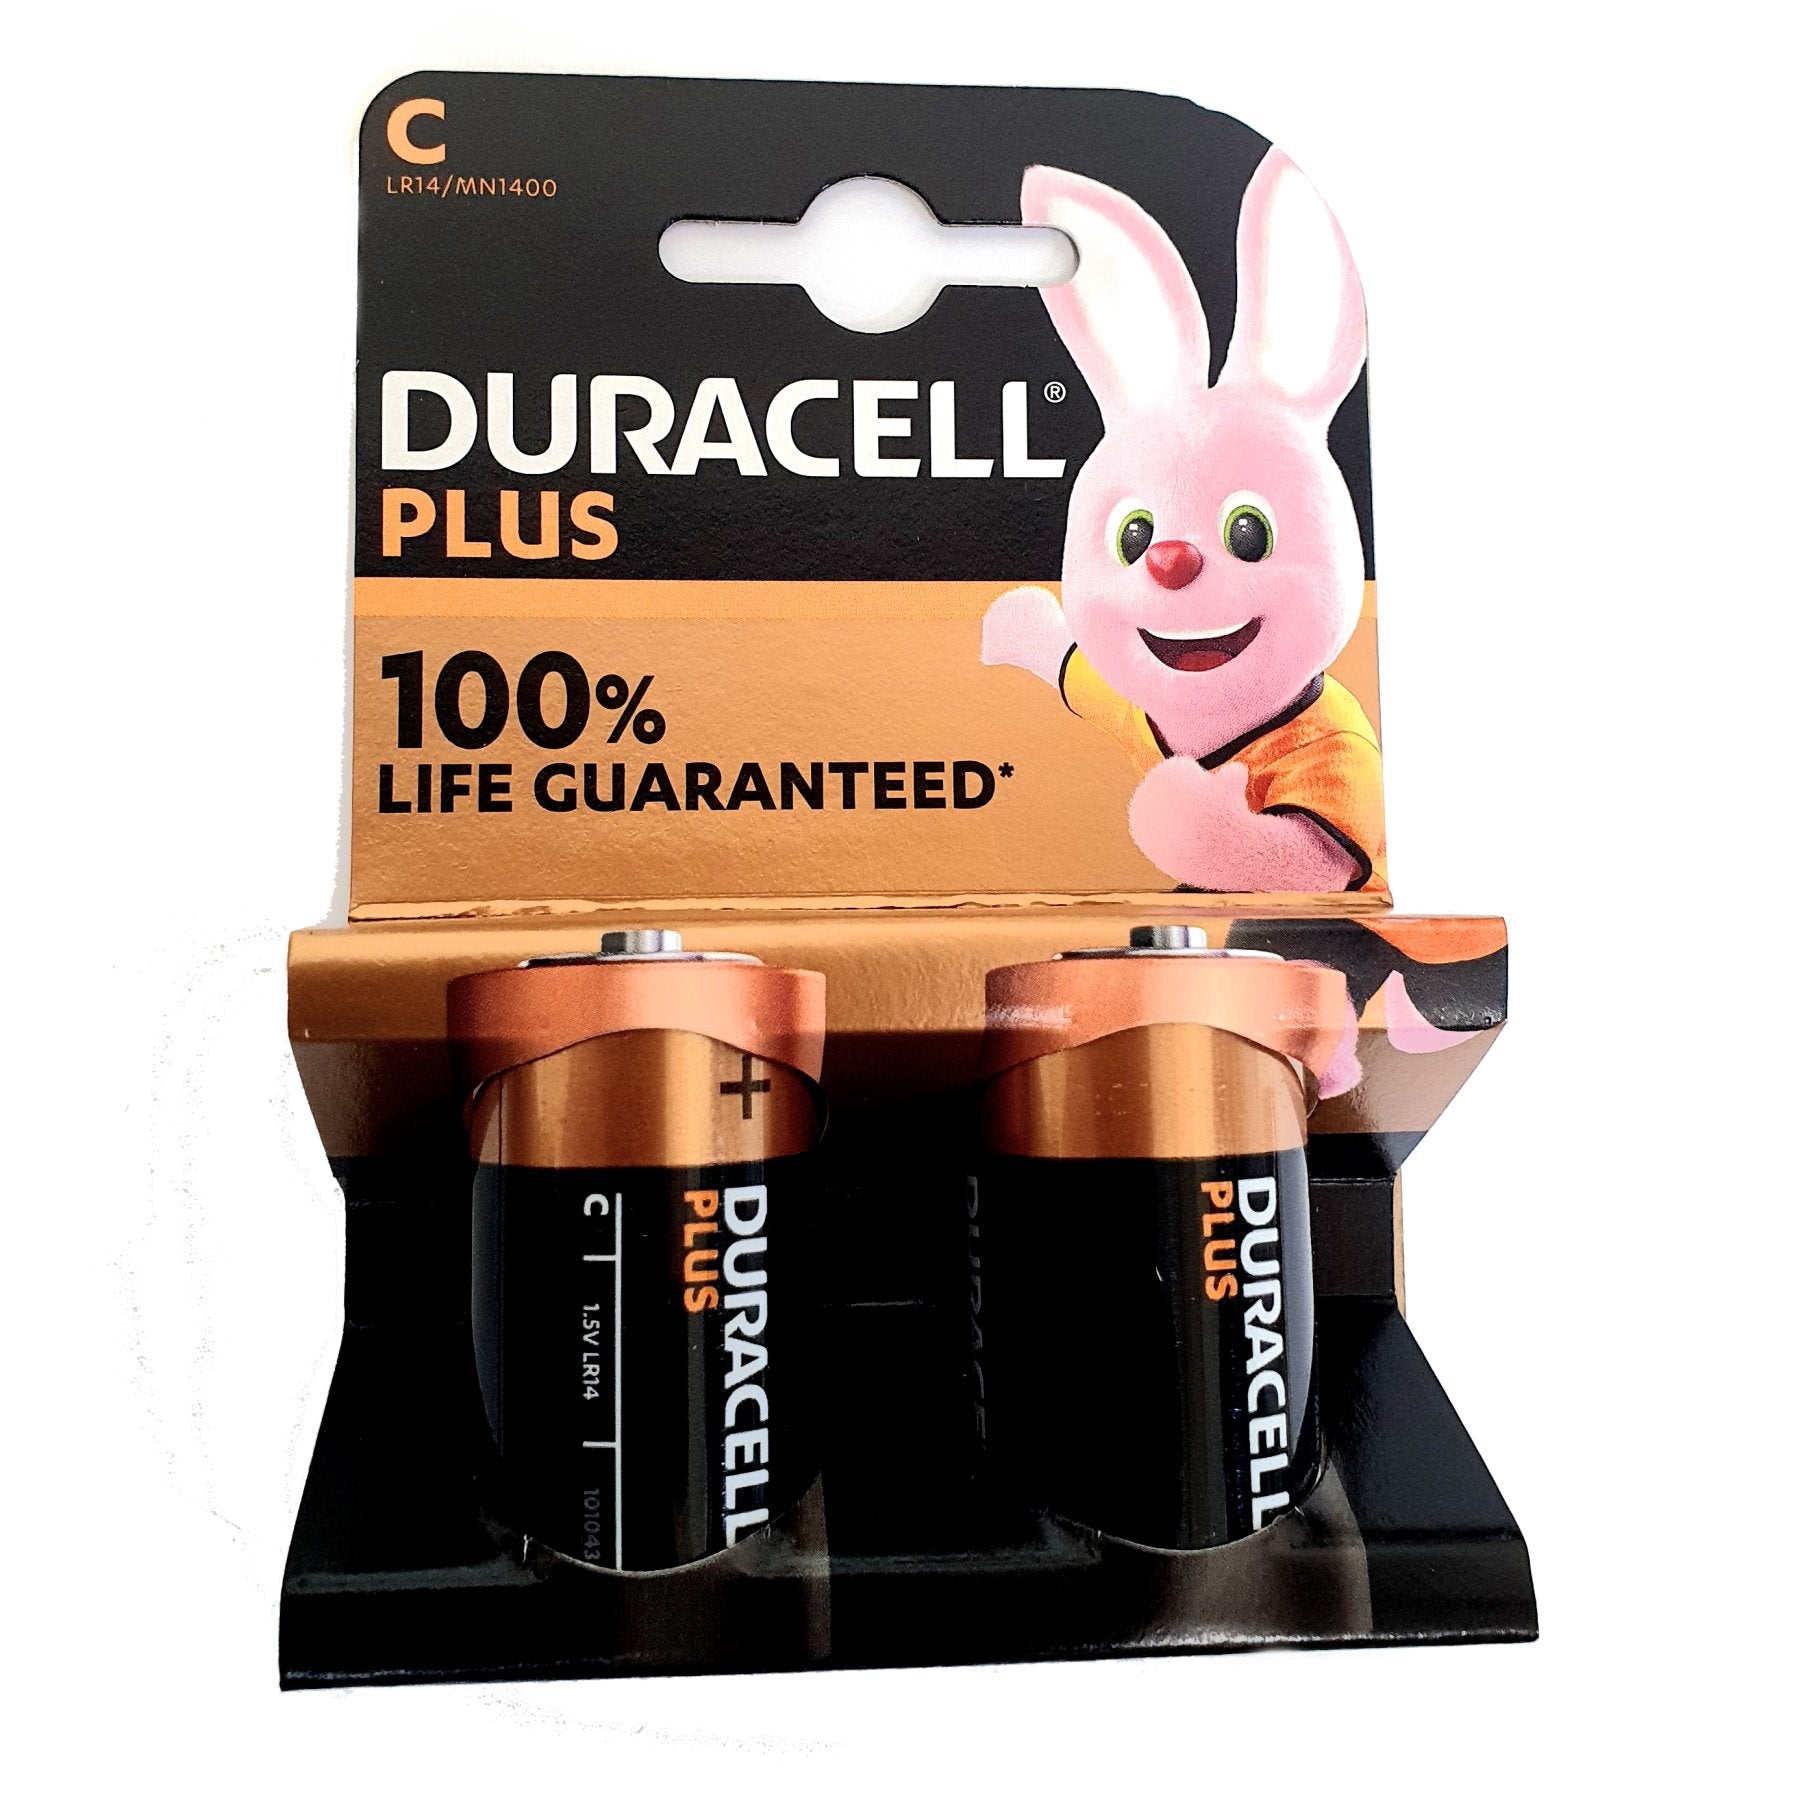 Duracell Plus Power Alkaline Pack of 2 C Battery LR14 MN1400